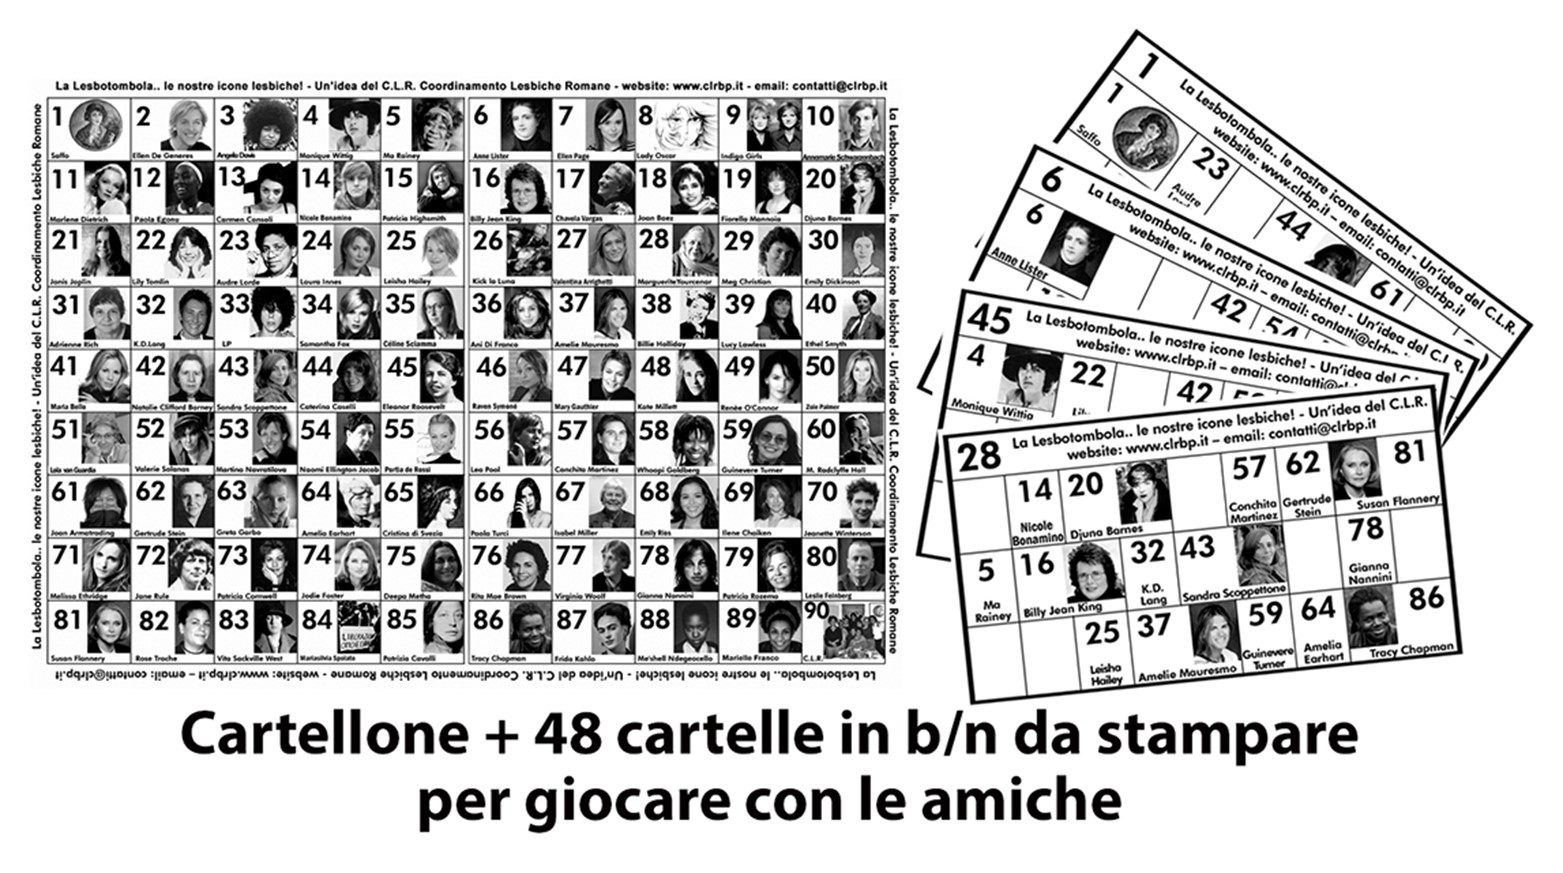 Cartellone +48 cartelle